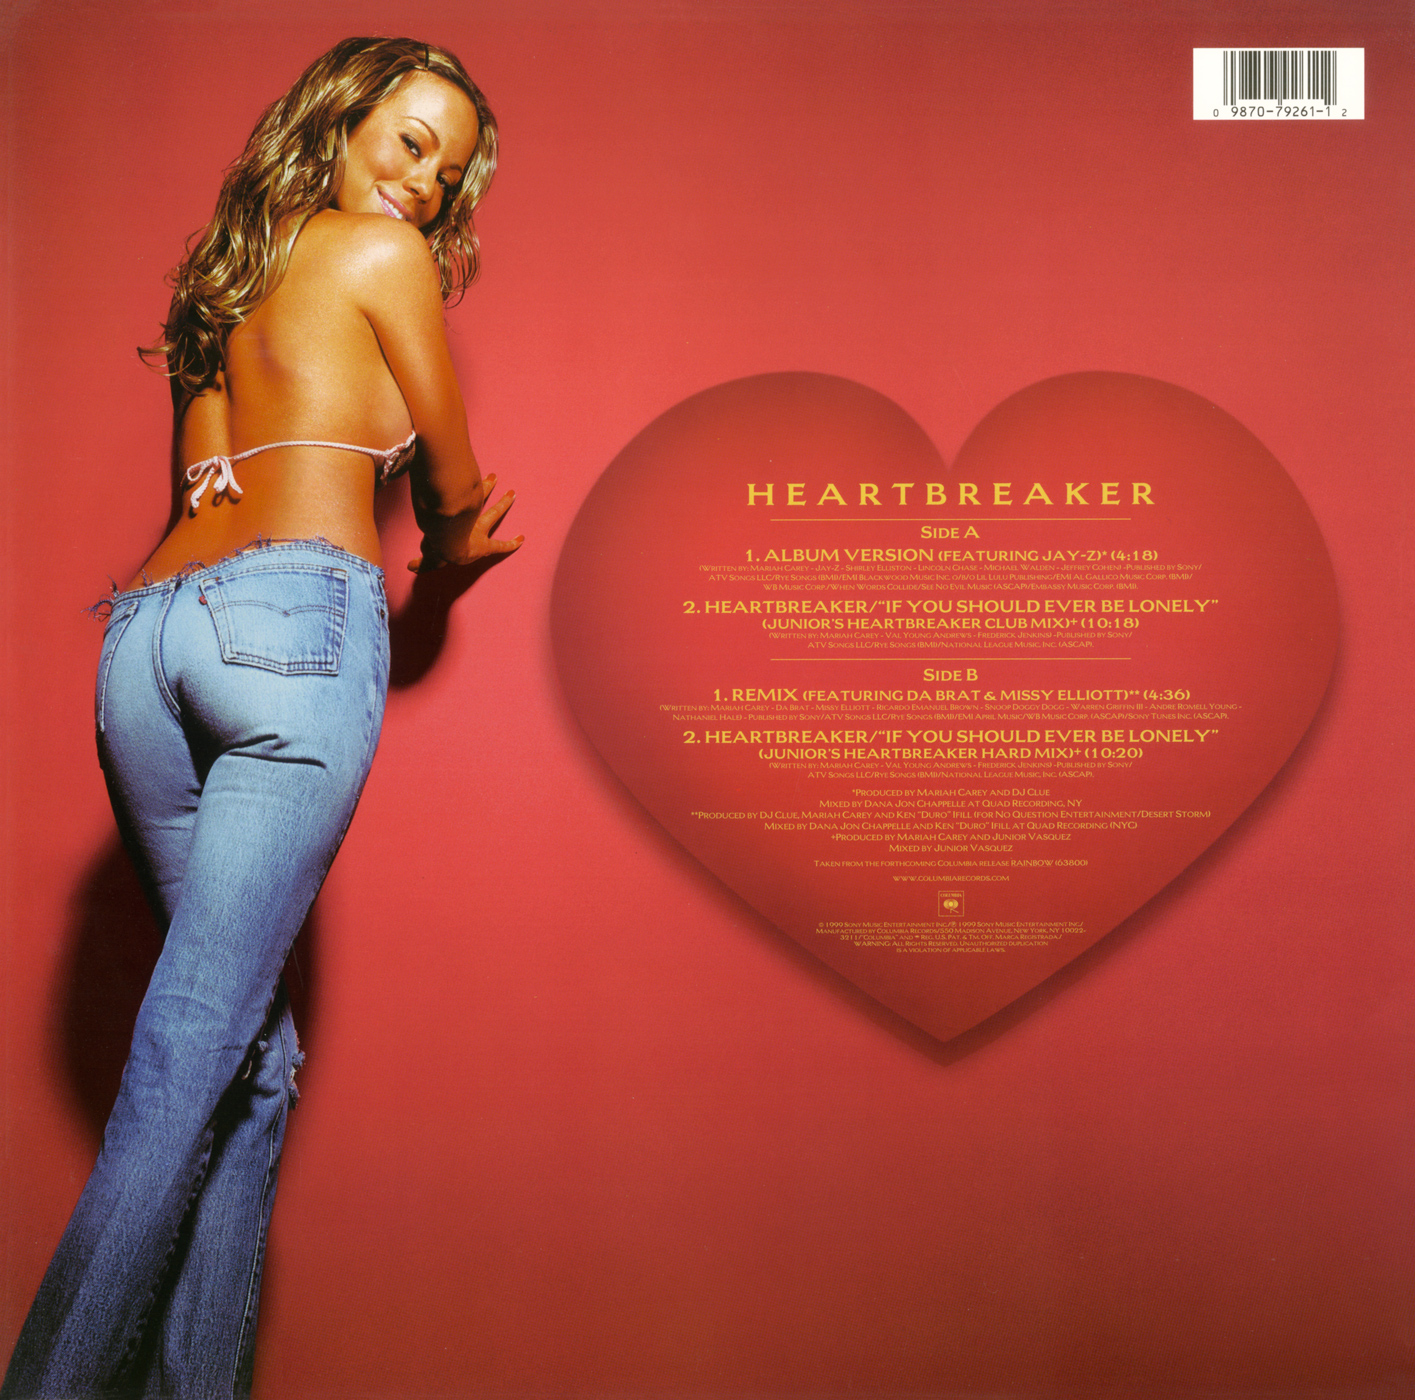 Heartbreaker – Mariah Carey back cover